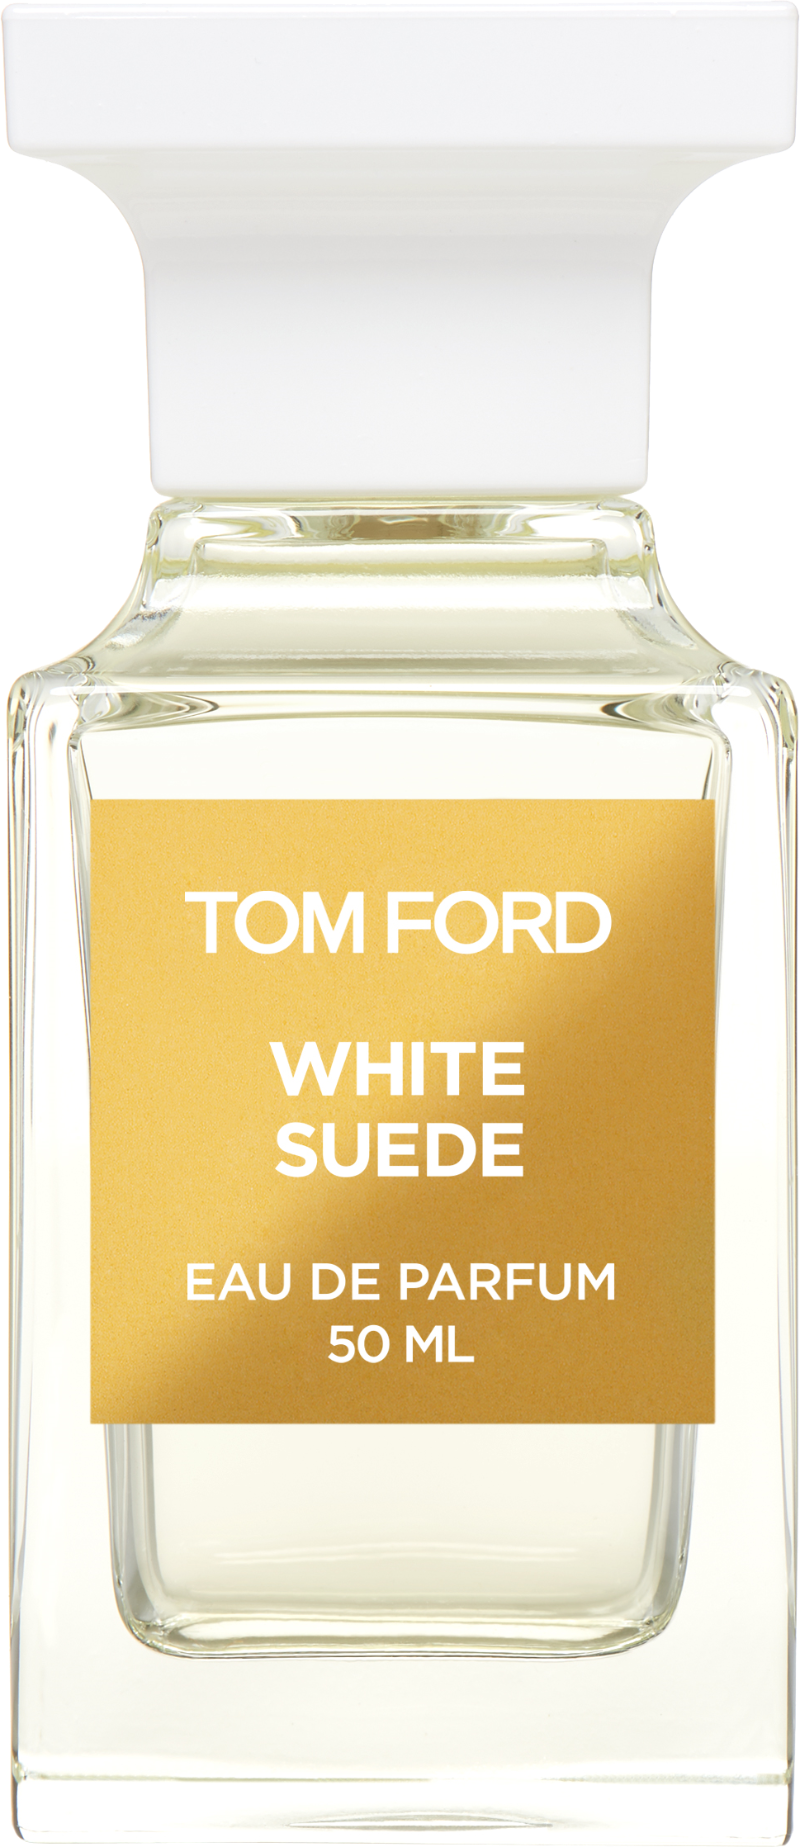 Tom Ford - Tom Ford White Suede EdP 50 ml - 888066089302